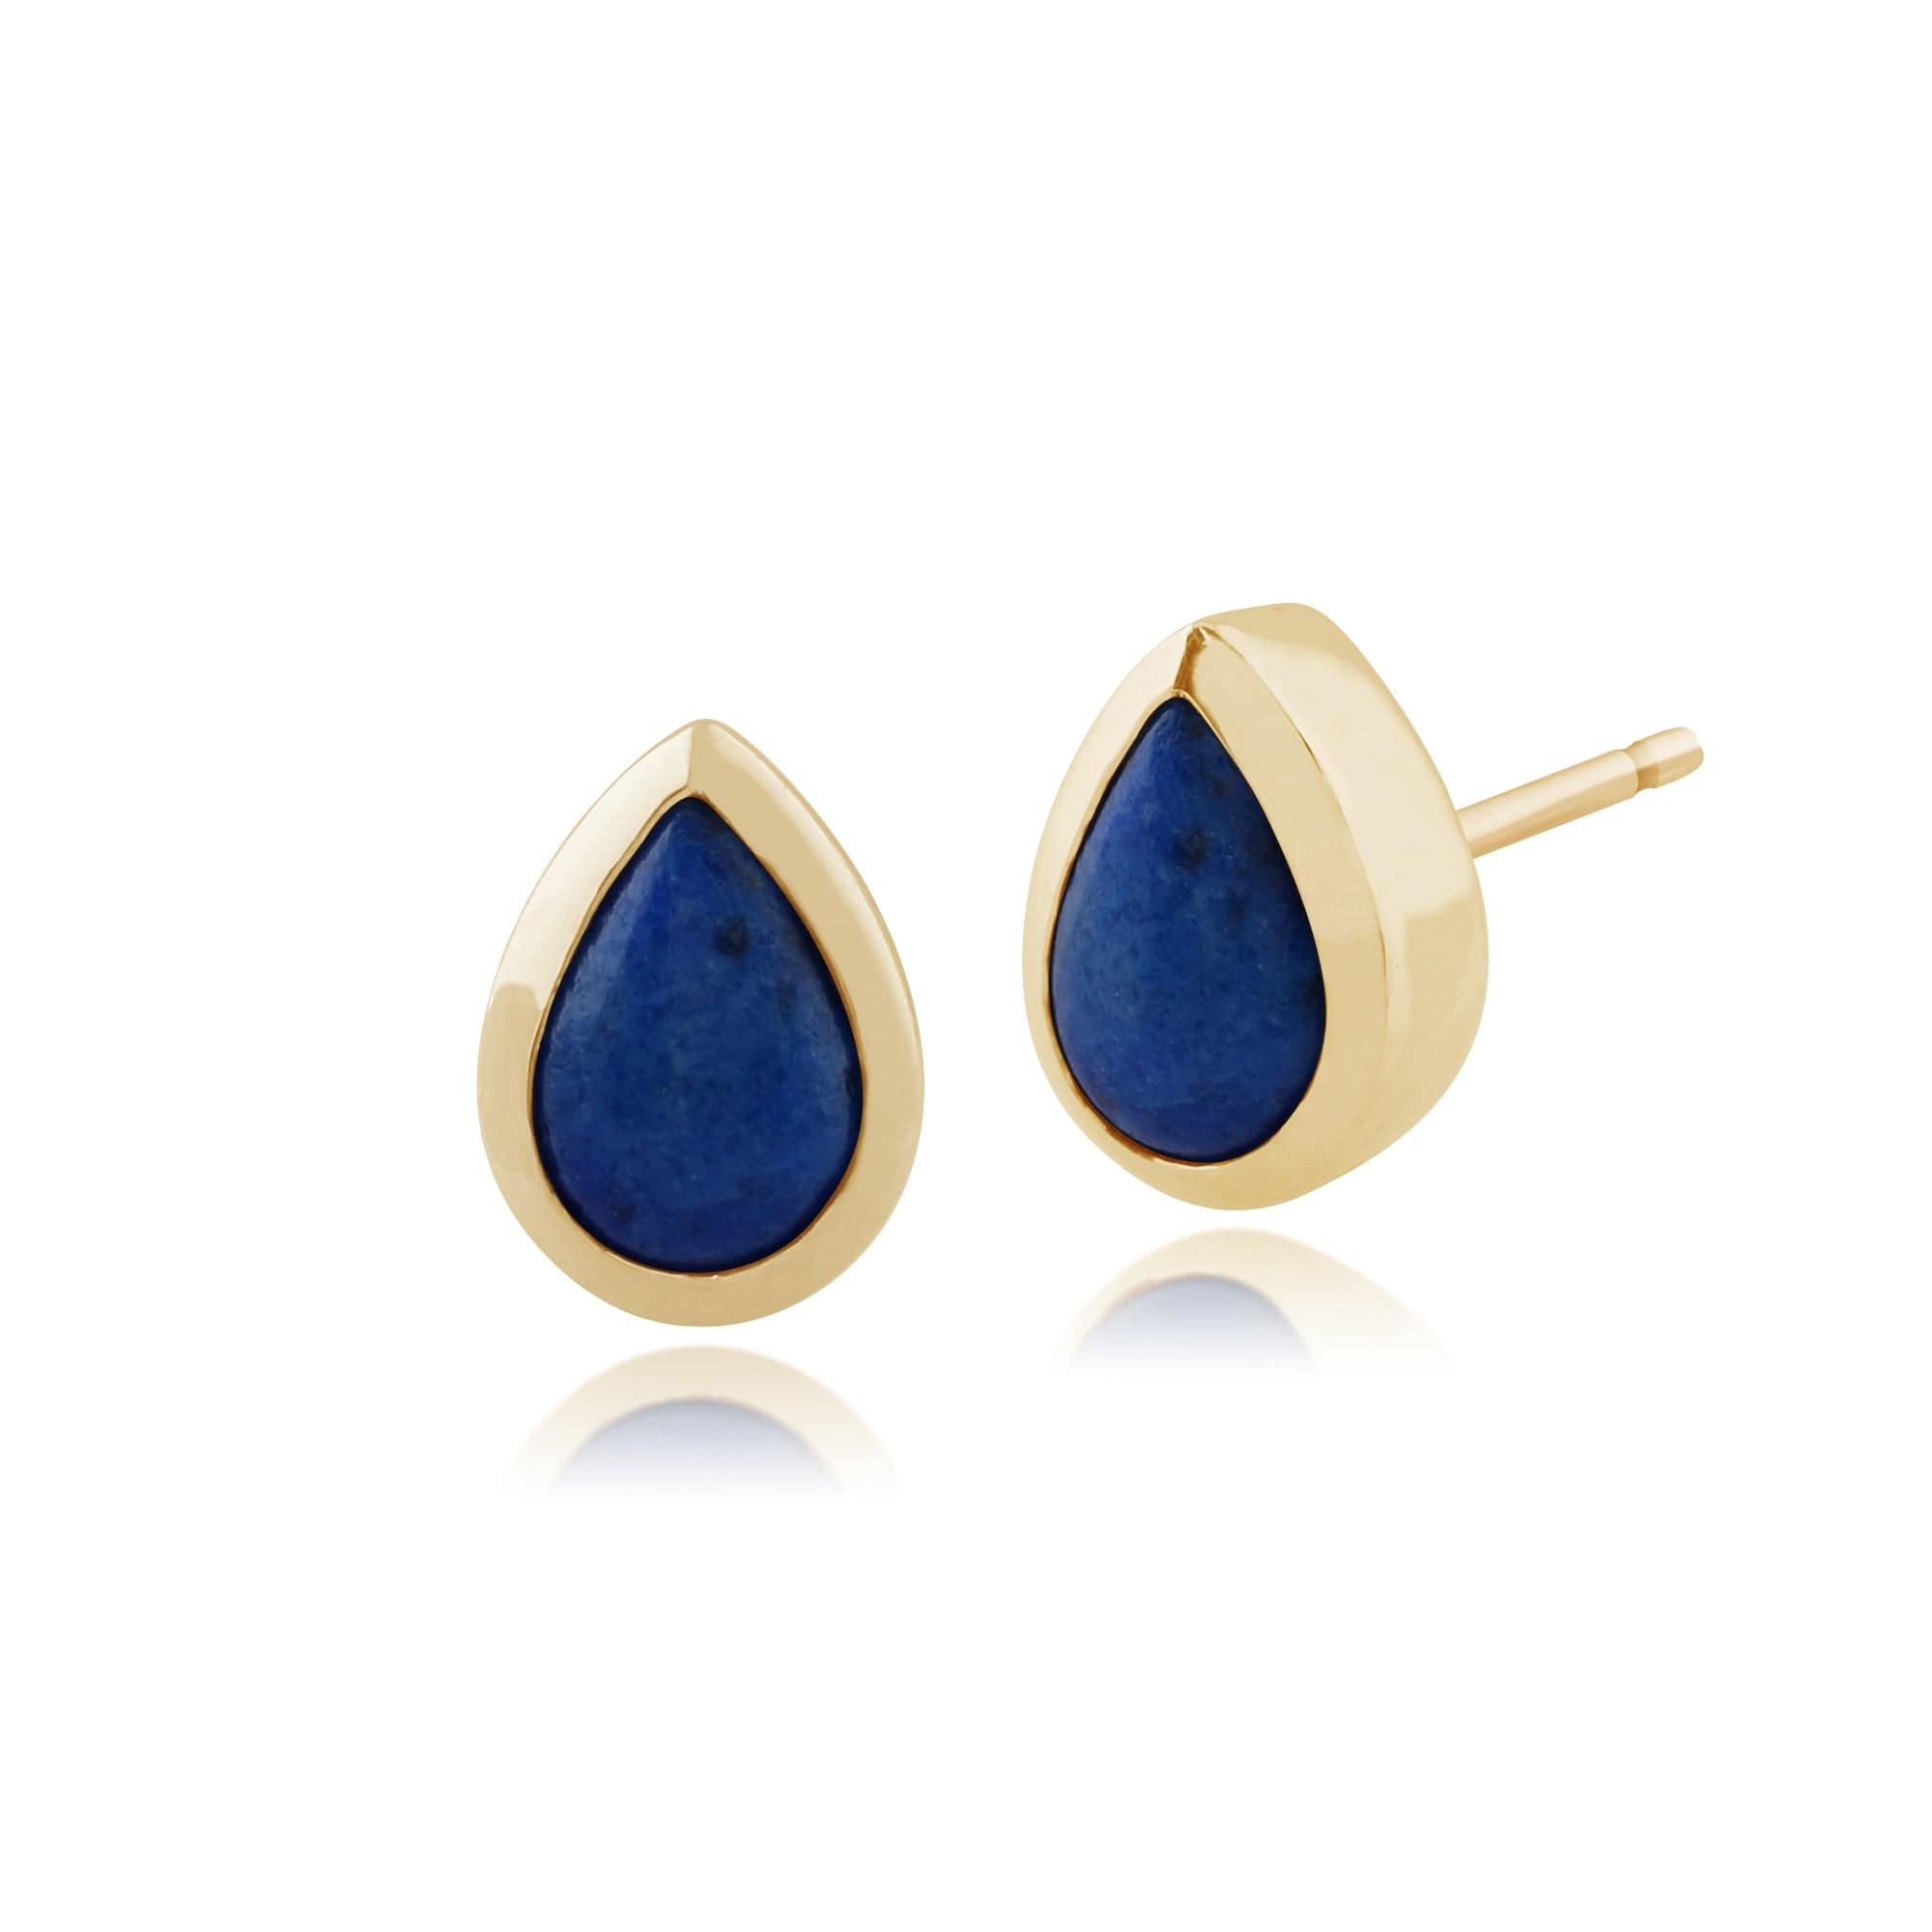 Gemondo 9ct Yellow Gold 0.71ct Lapis Lazuli Stud Earrings Image